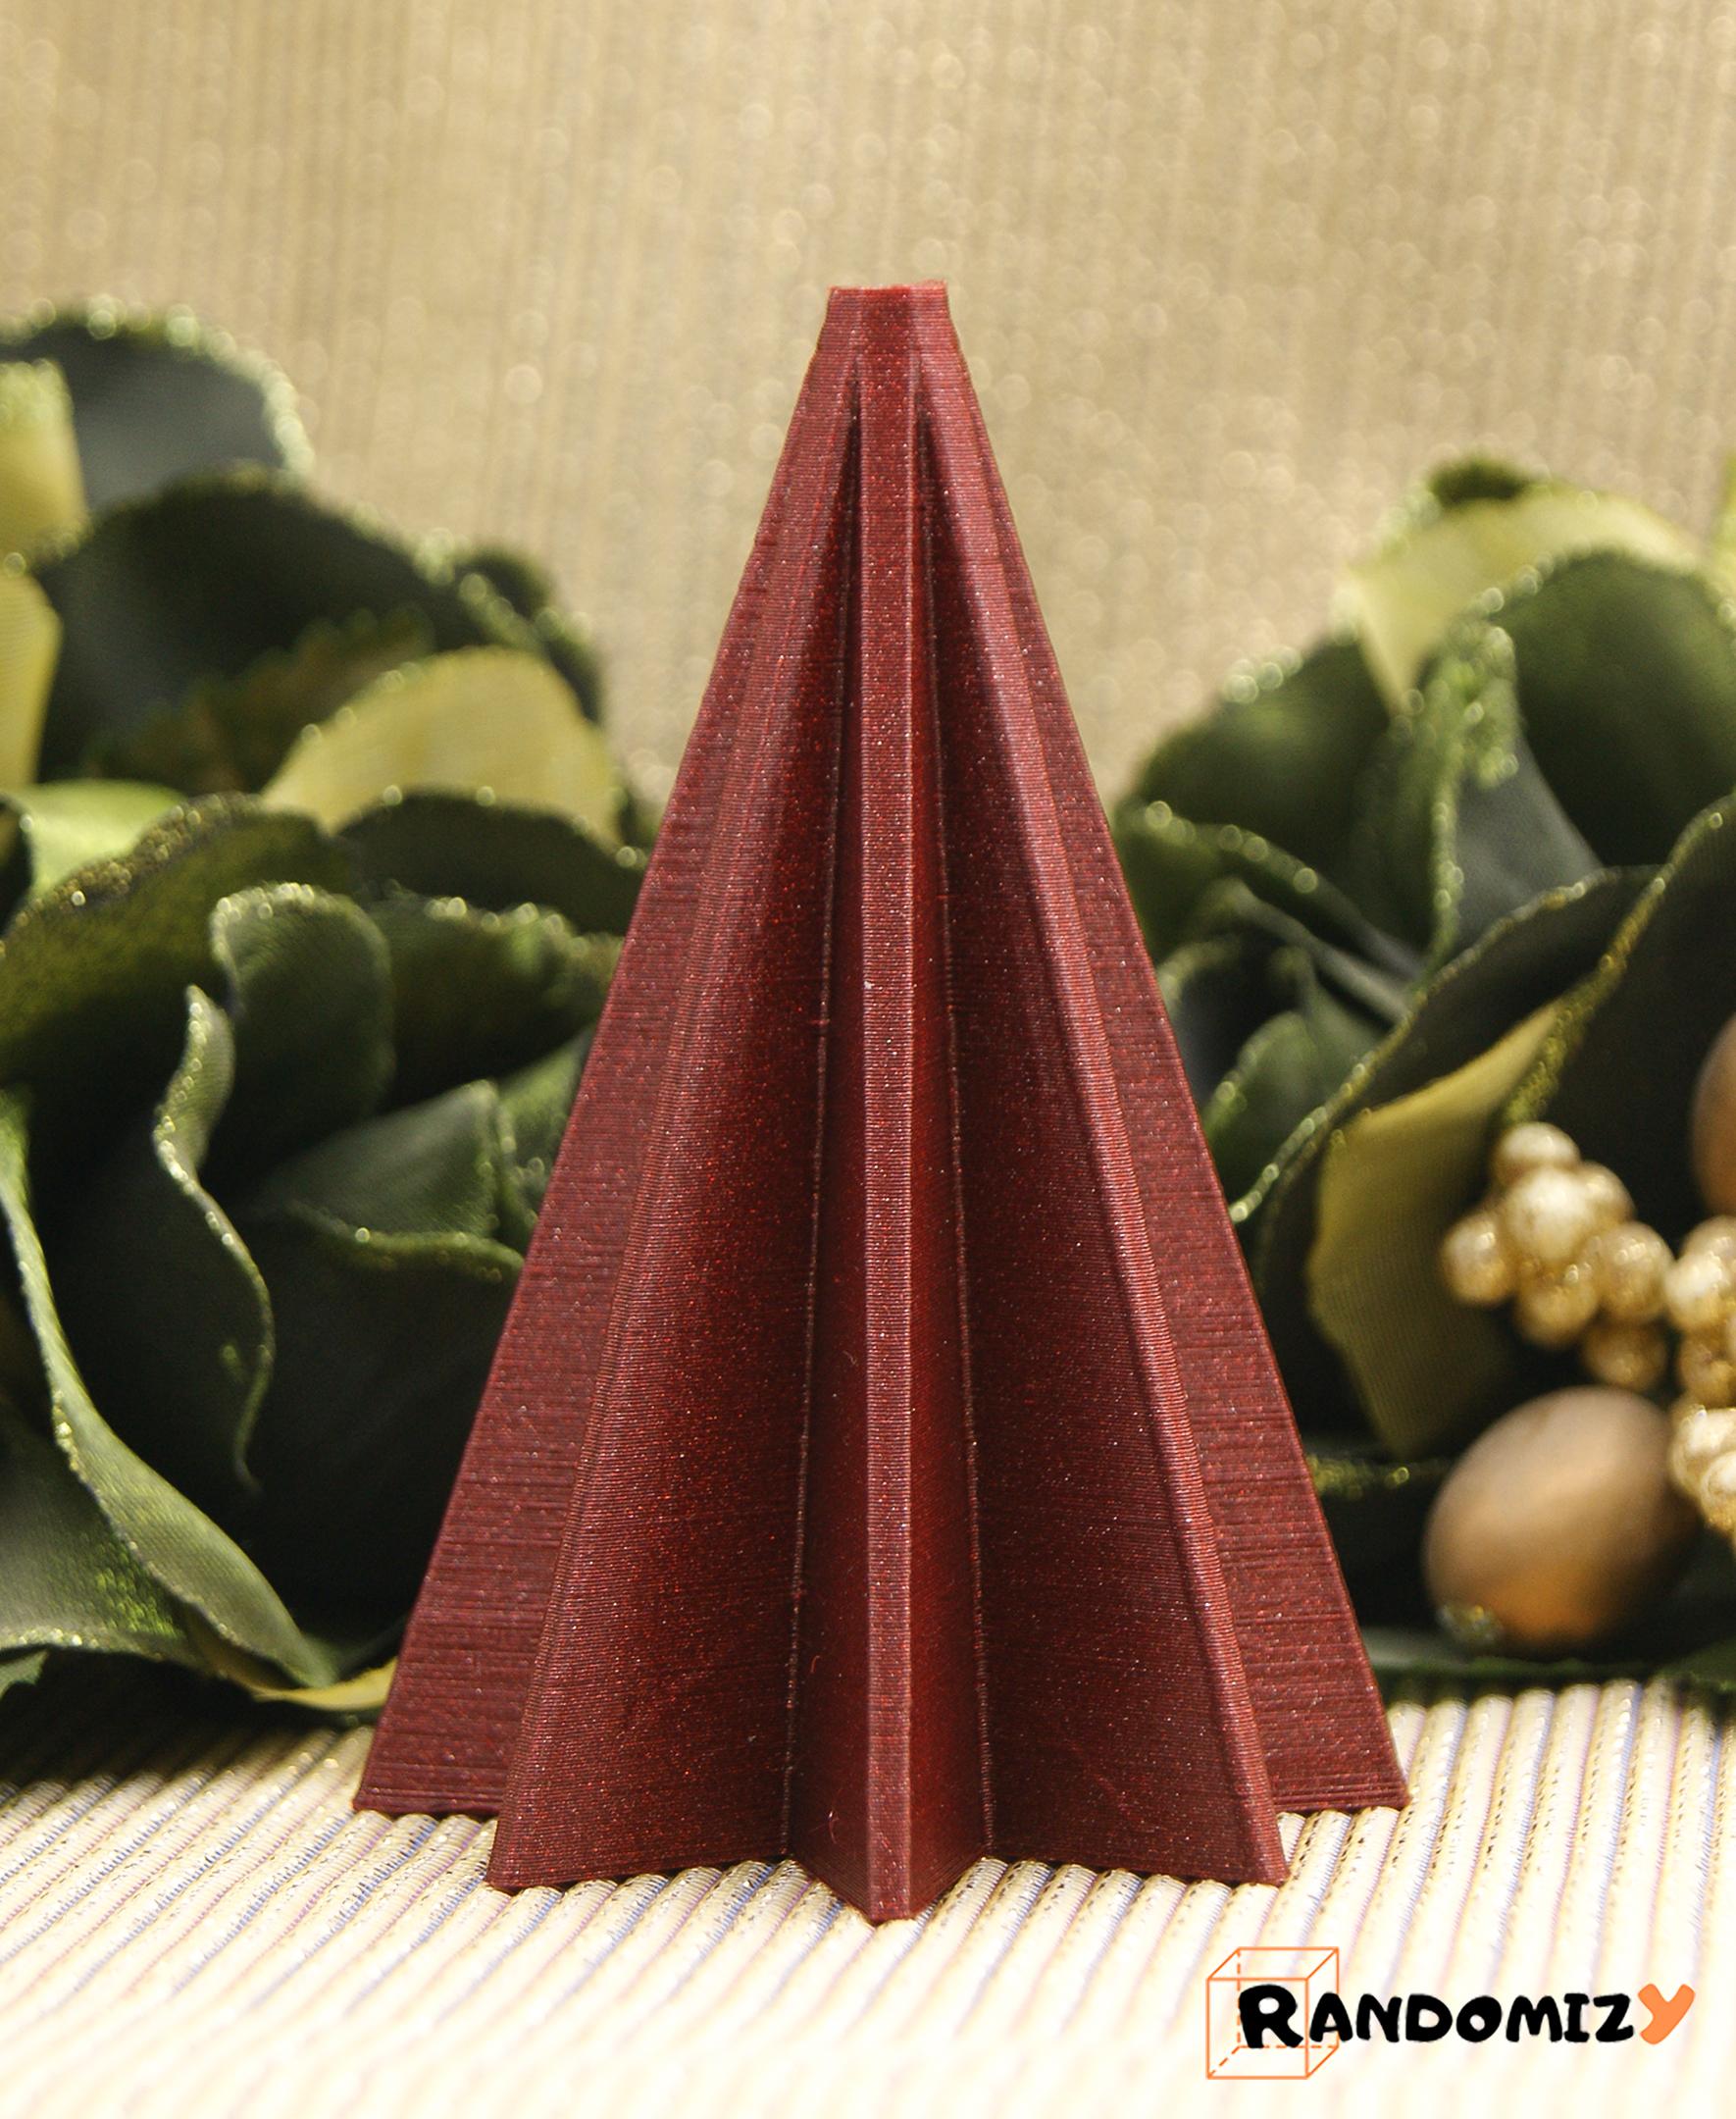 Origami Inspired Tree Ornament #1 3d model